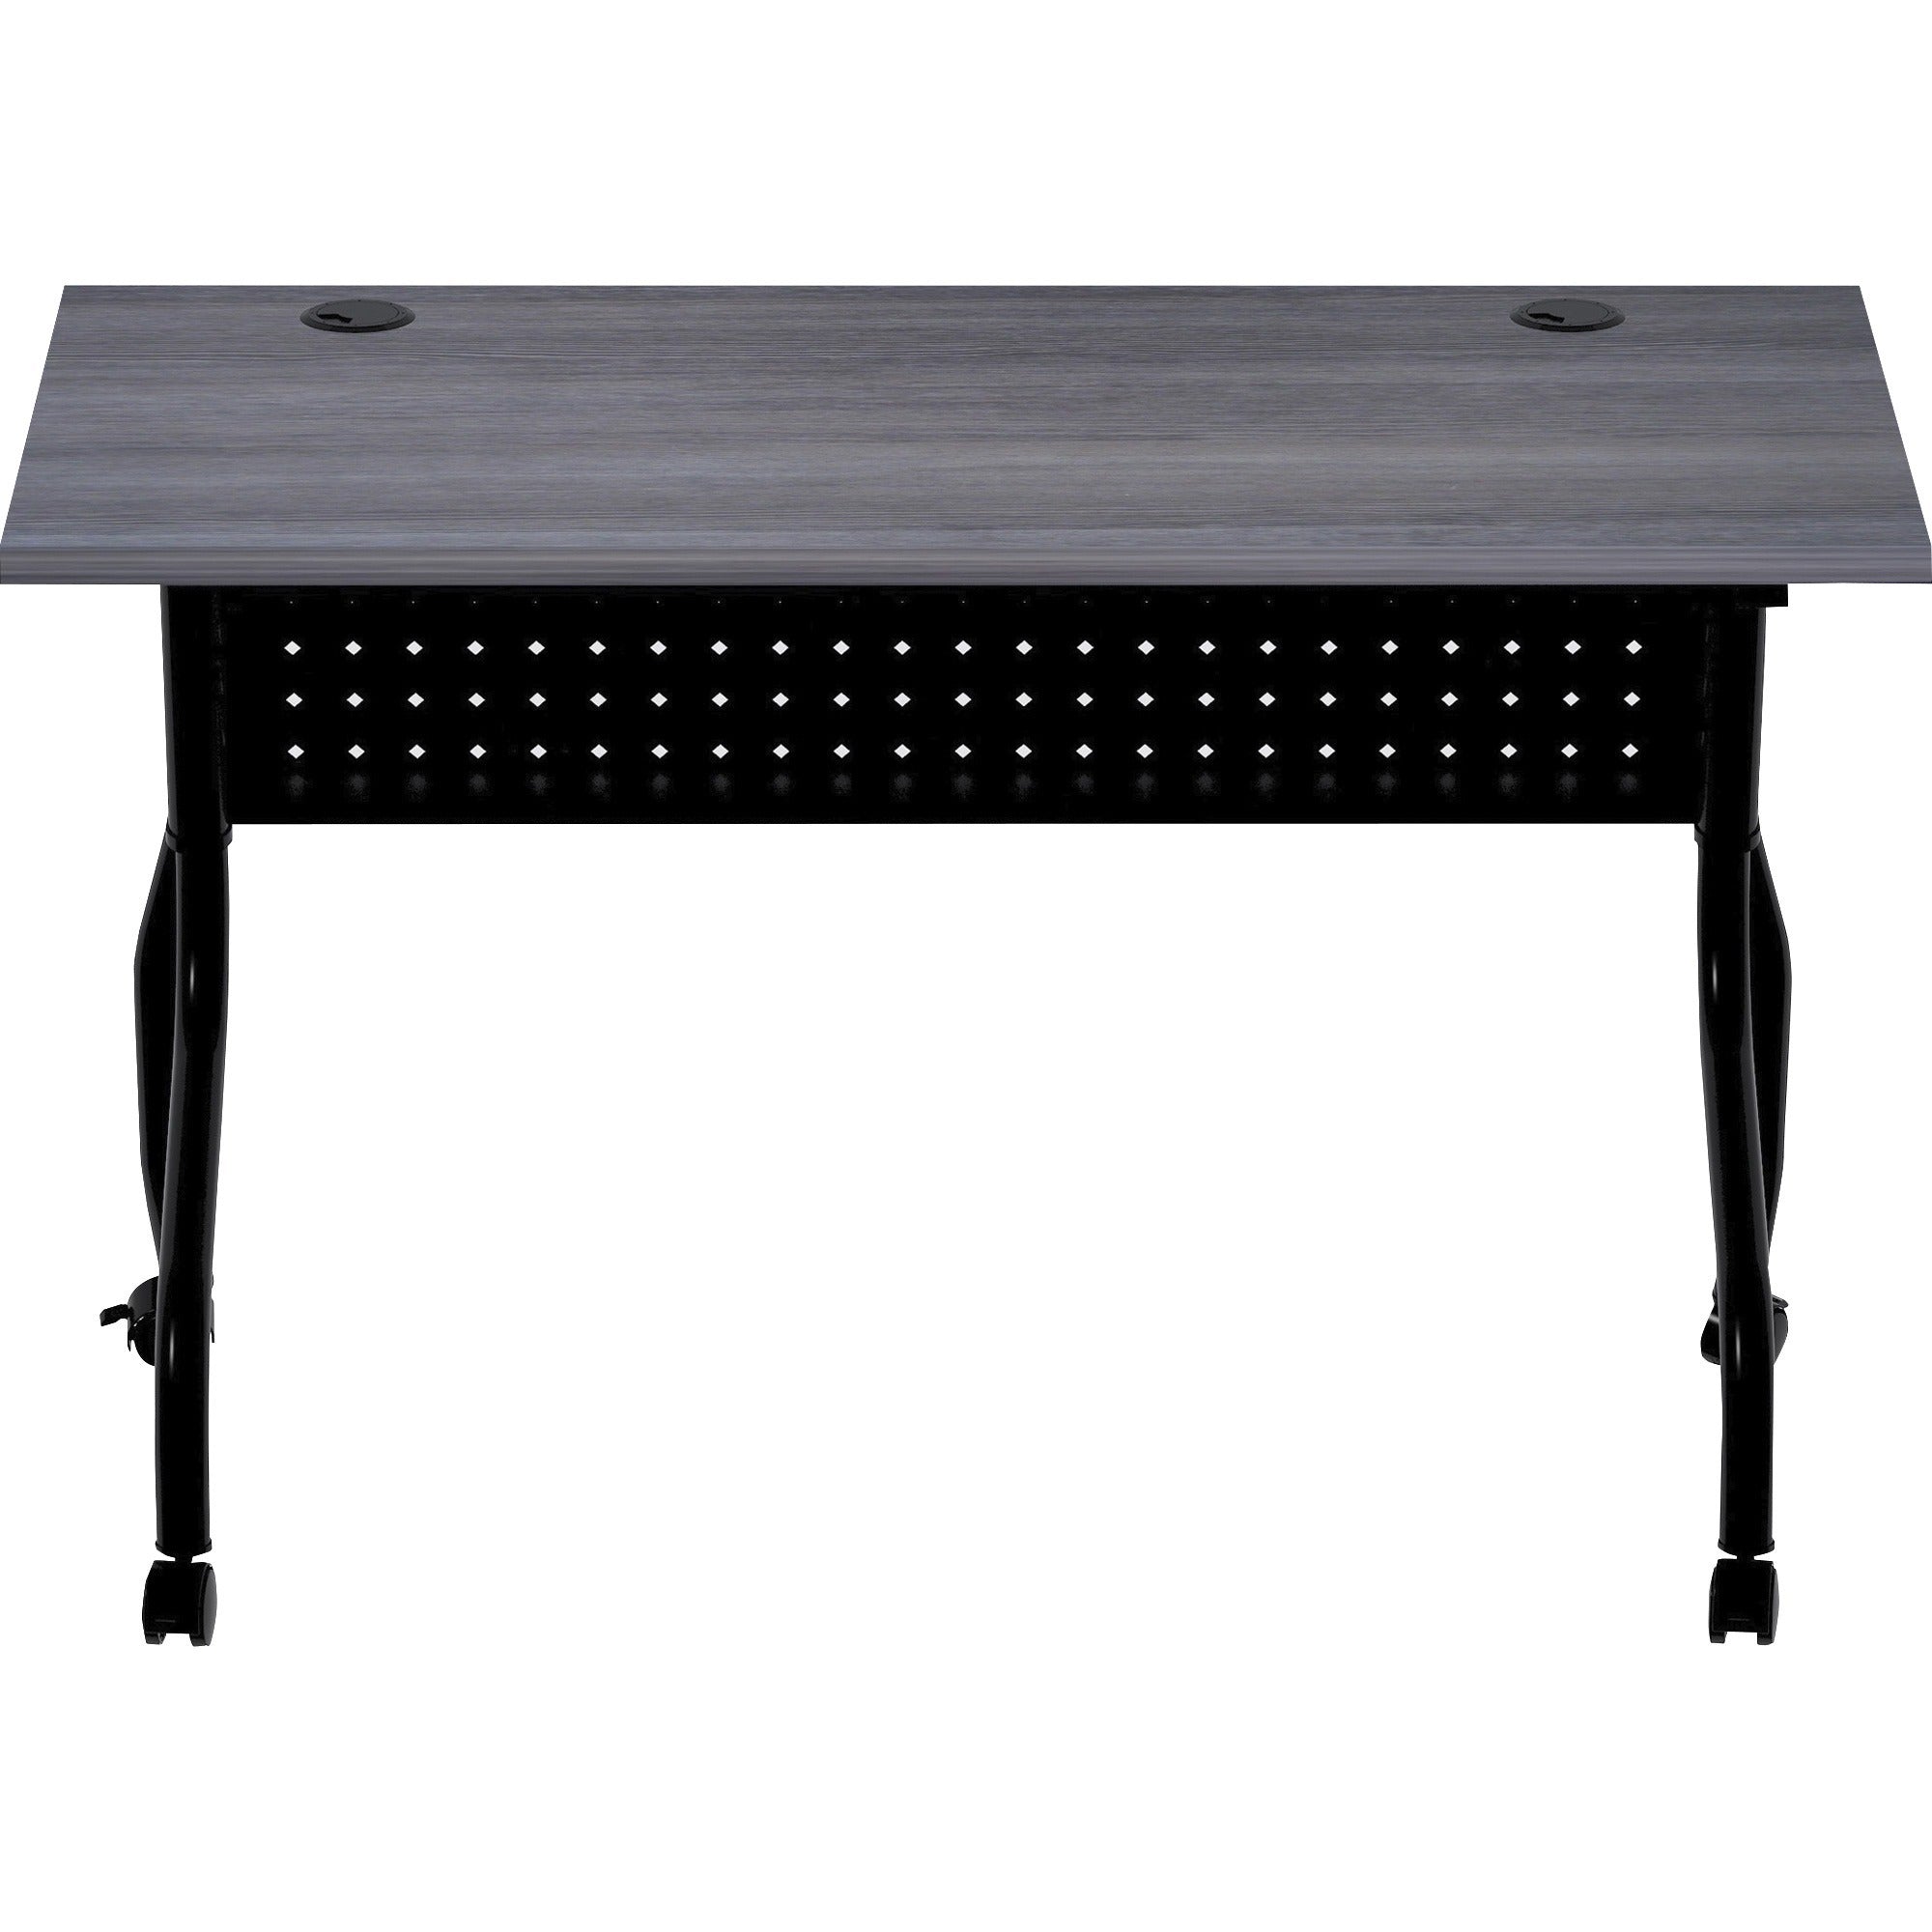 lorell-flip-top-training-table-for-table-topcharcoal-rectangle-melamine-top-black-four-leg-base-4-legs-x-48-table-top-width-x-2360-table-top-depth-2950-height-melamine-1-each_llr59489 - 3